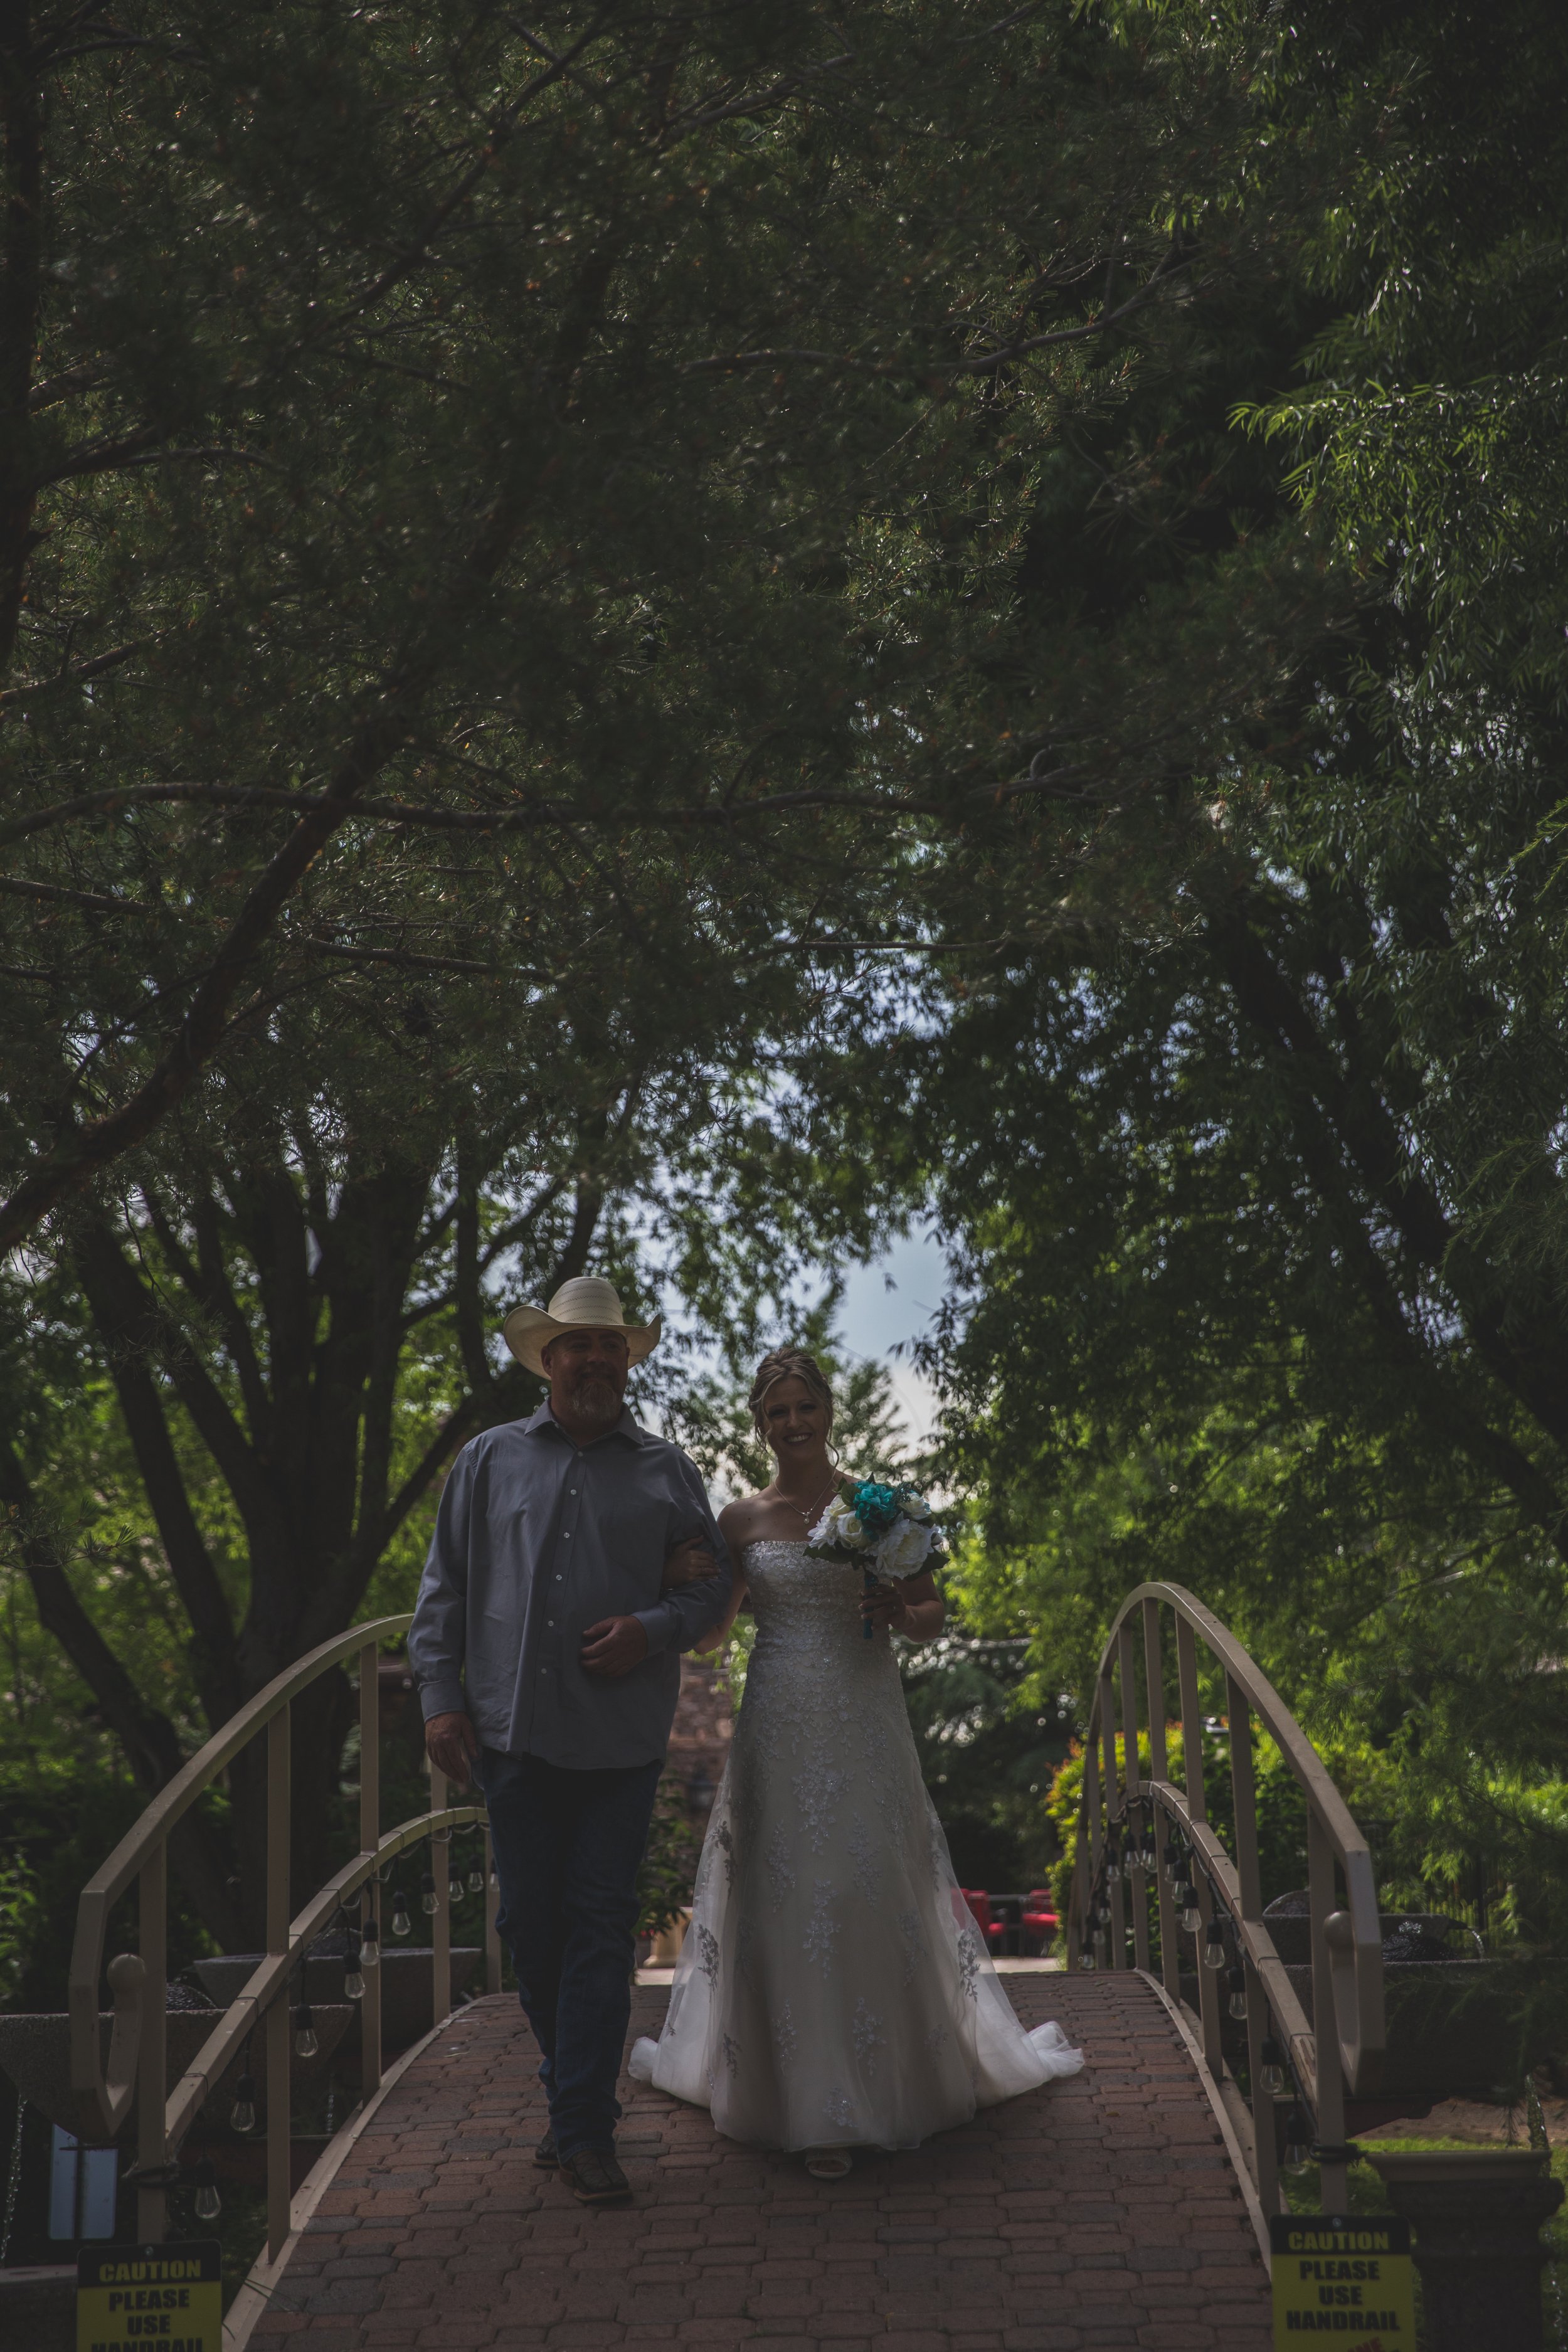  Bride and Groom walking at Arizona wedding by Northern Arizona Wedding Photographer, Jennifer Lind Schutsky.  